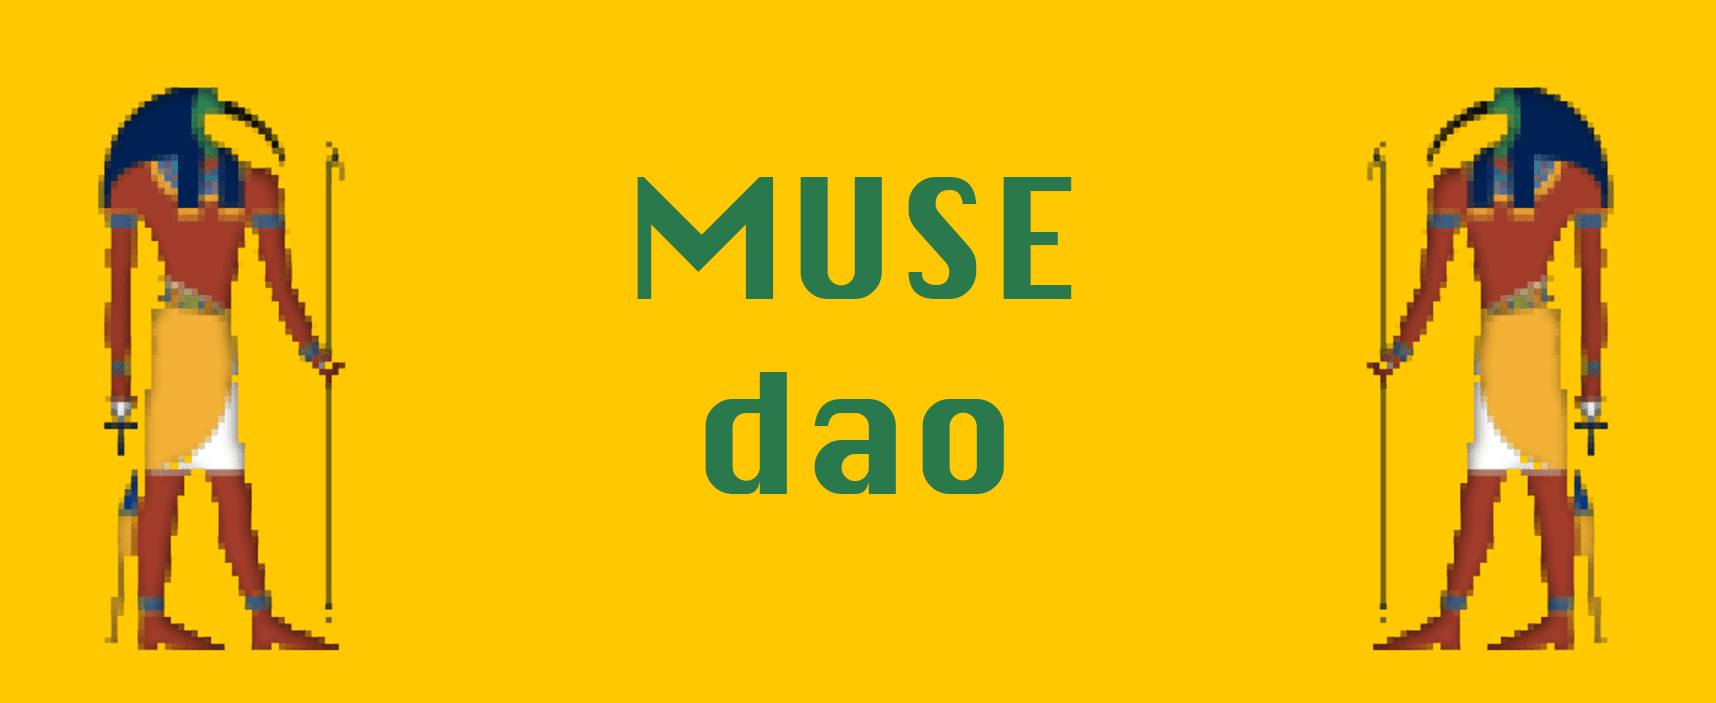 MUSEdao banner